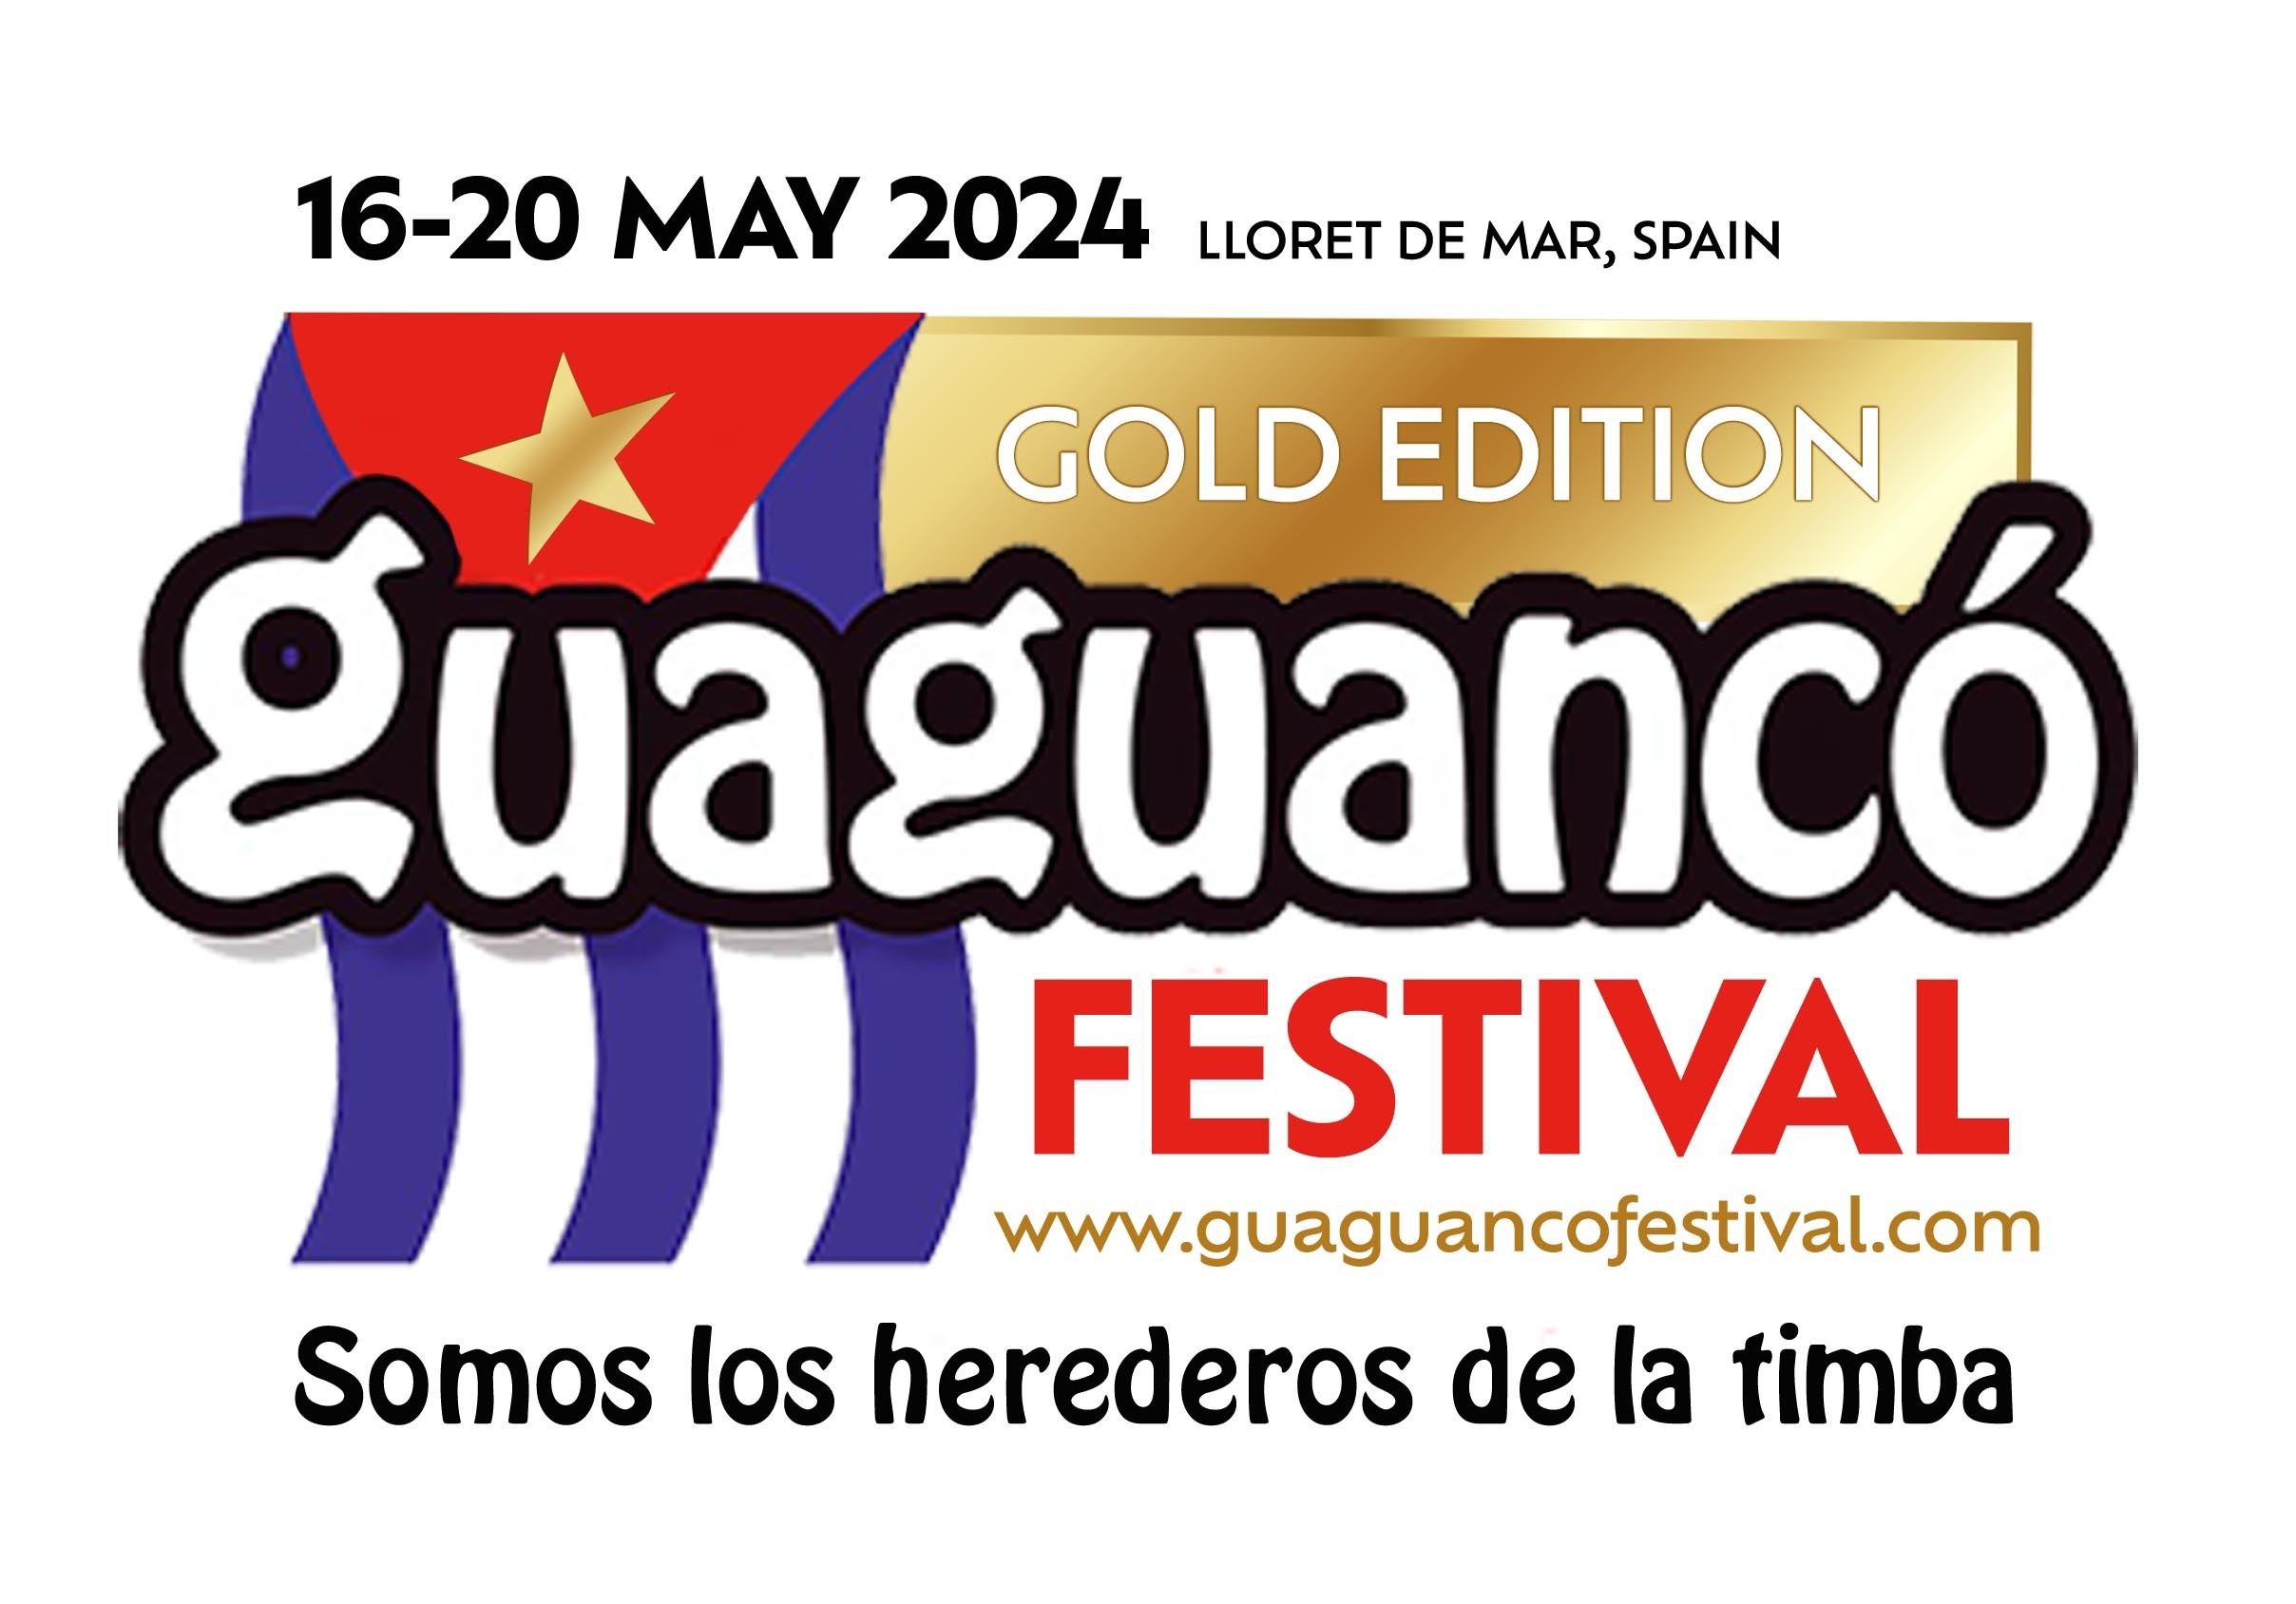 Guaguancó Festival